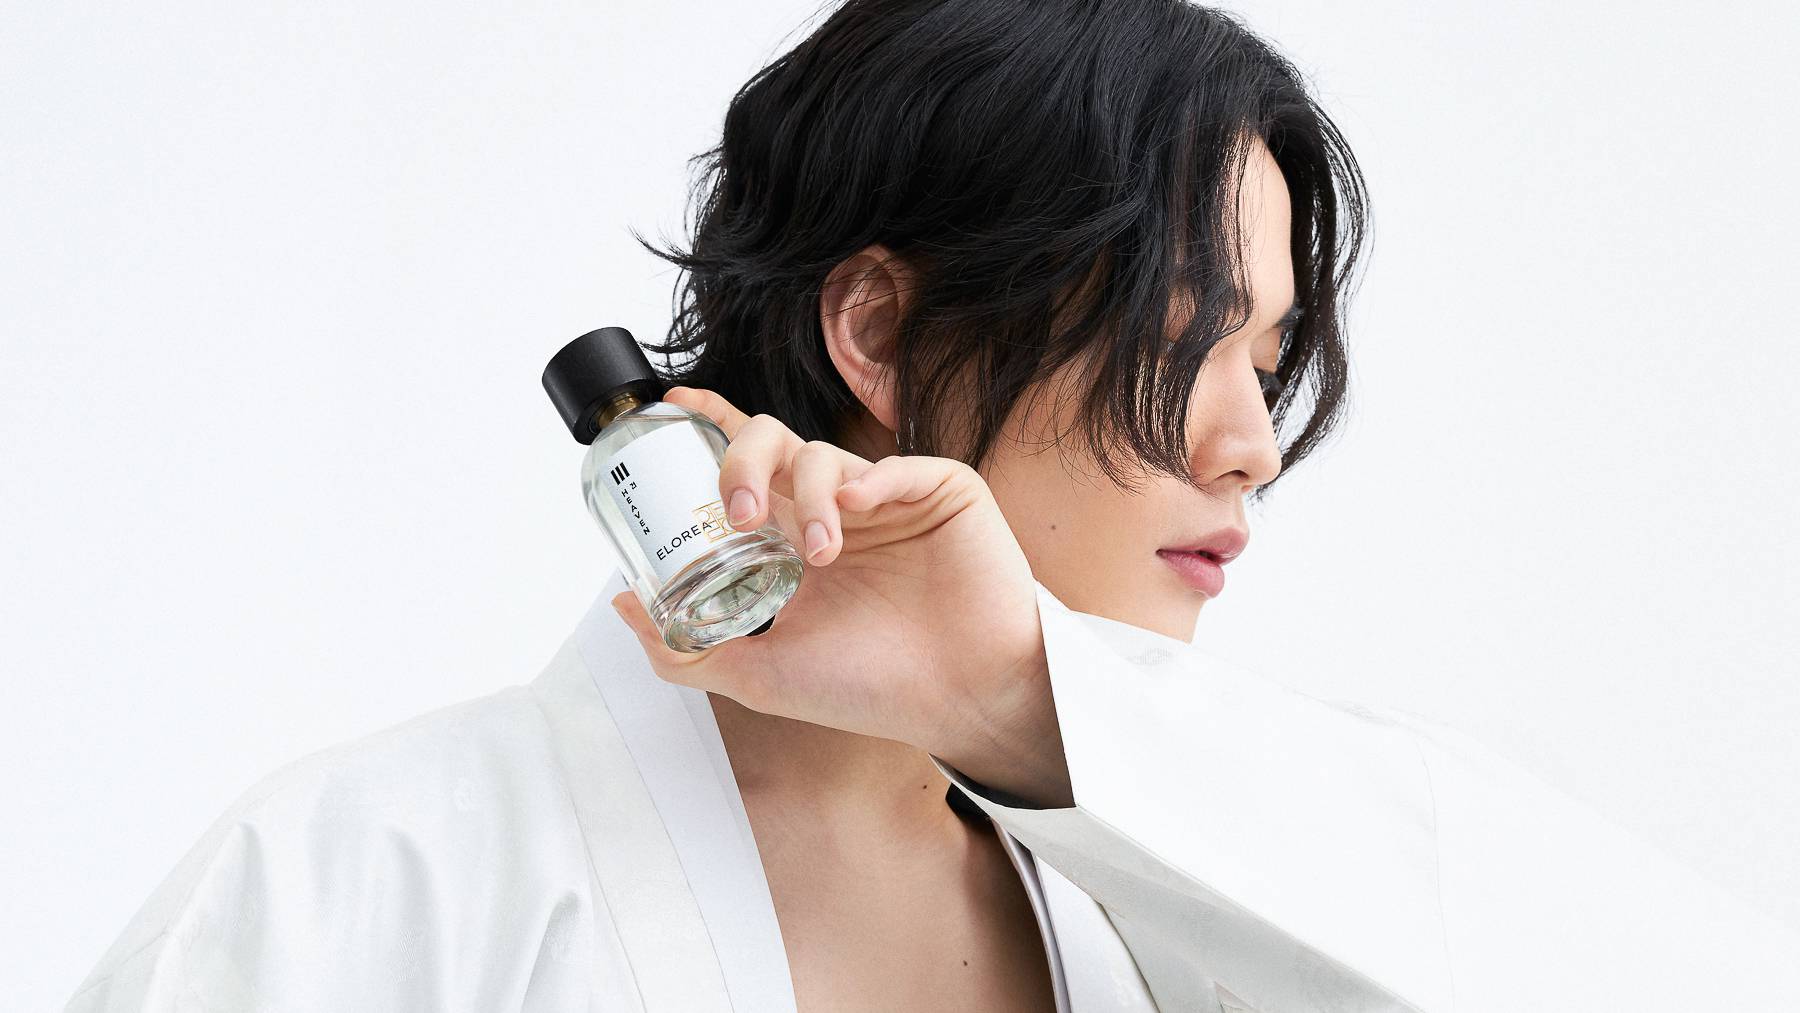 Model in traditional Korean attire holding Elorea perfume.